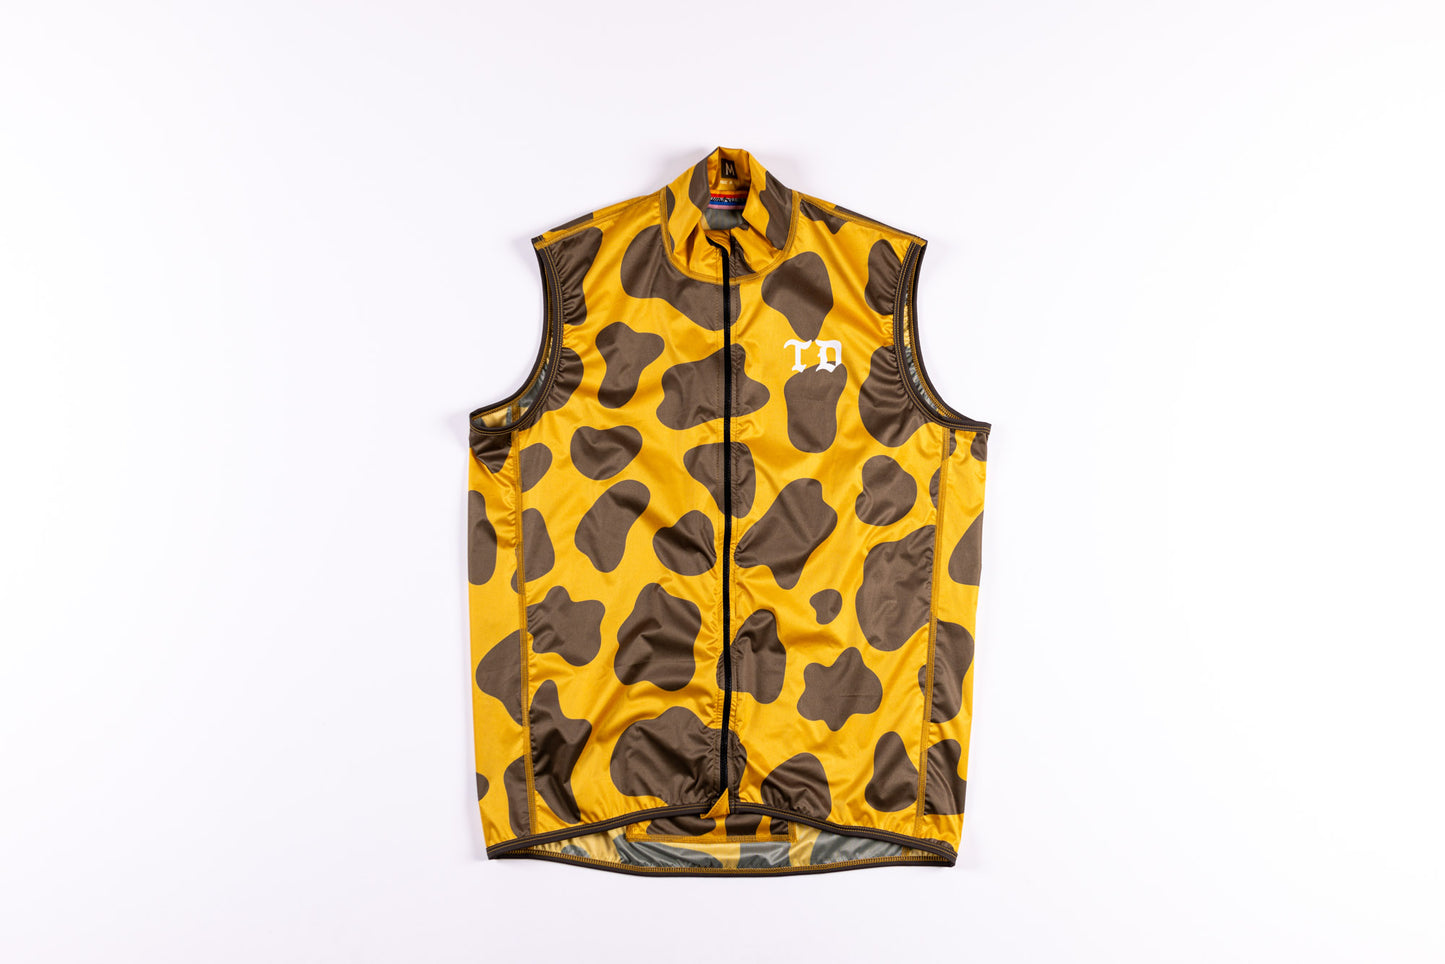 euroVACAY Giraffe Packable Vests